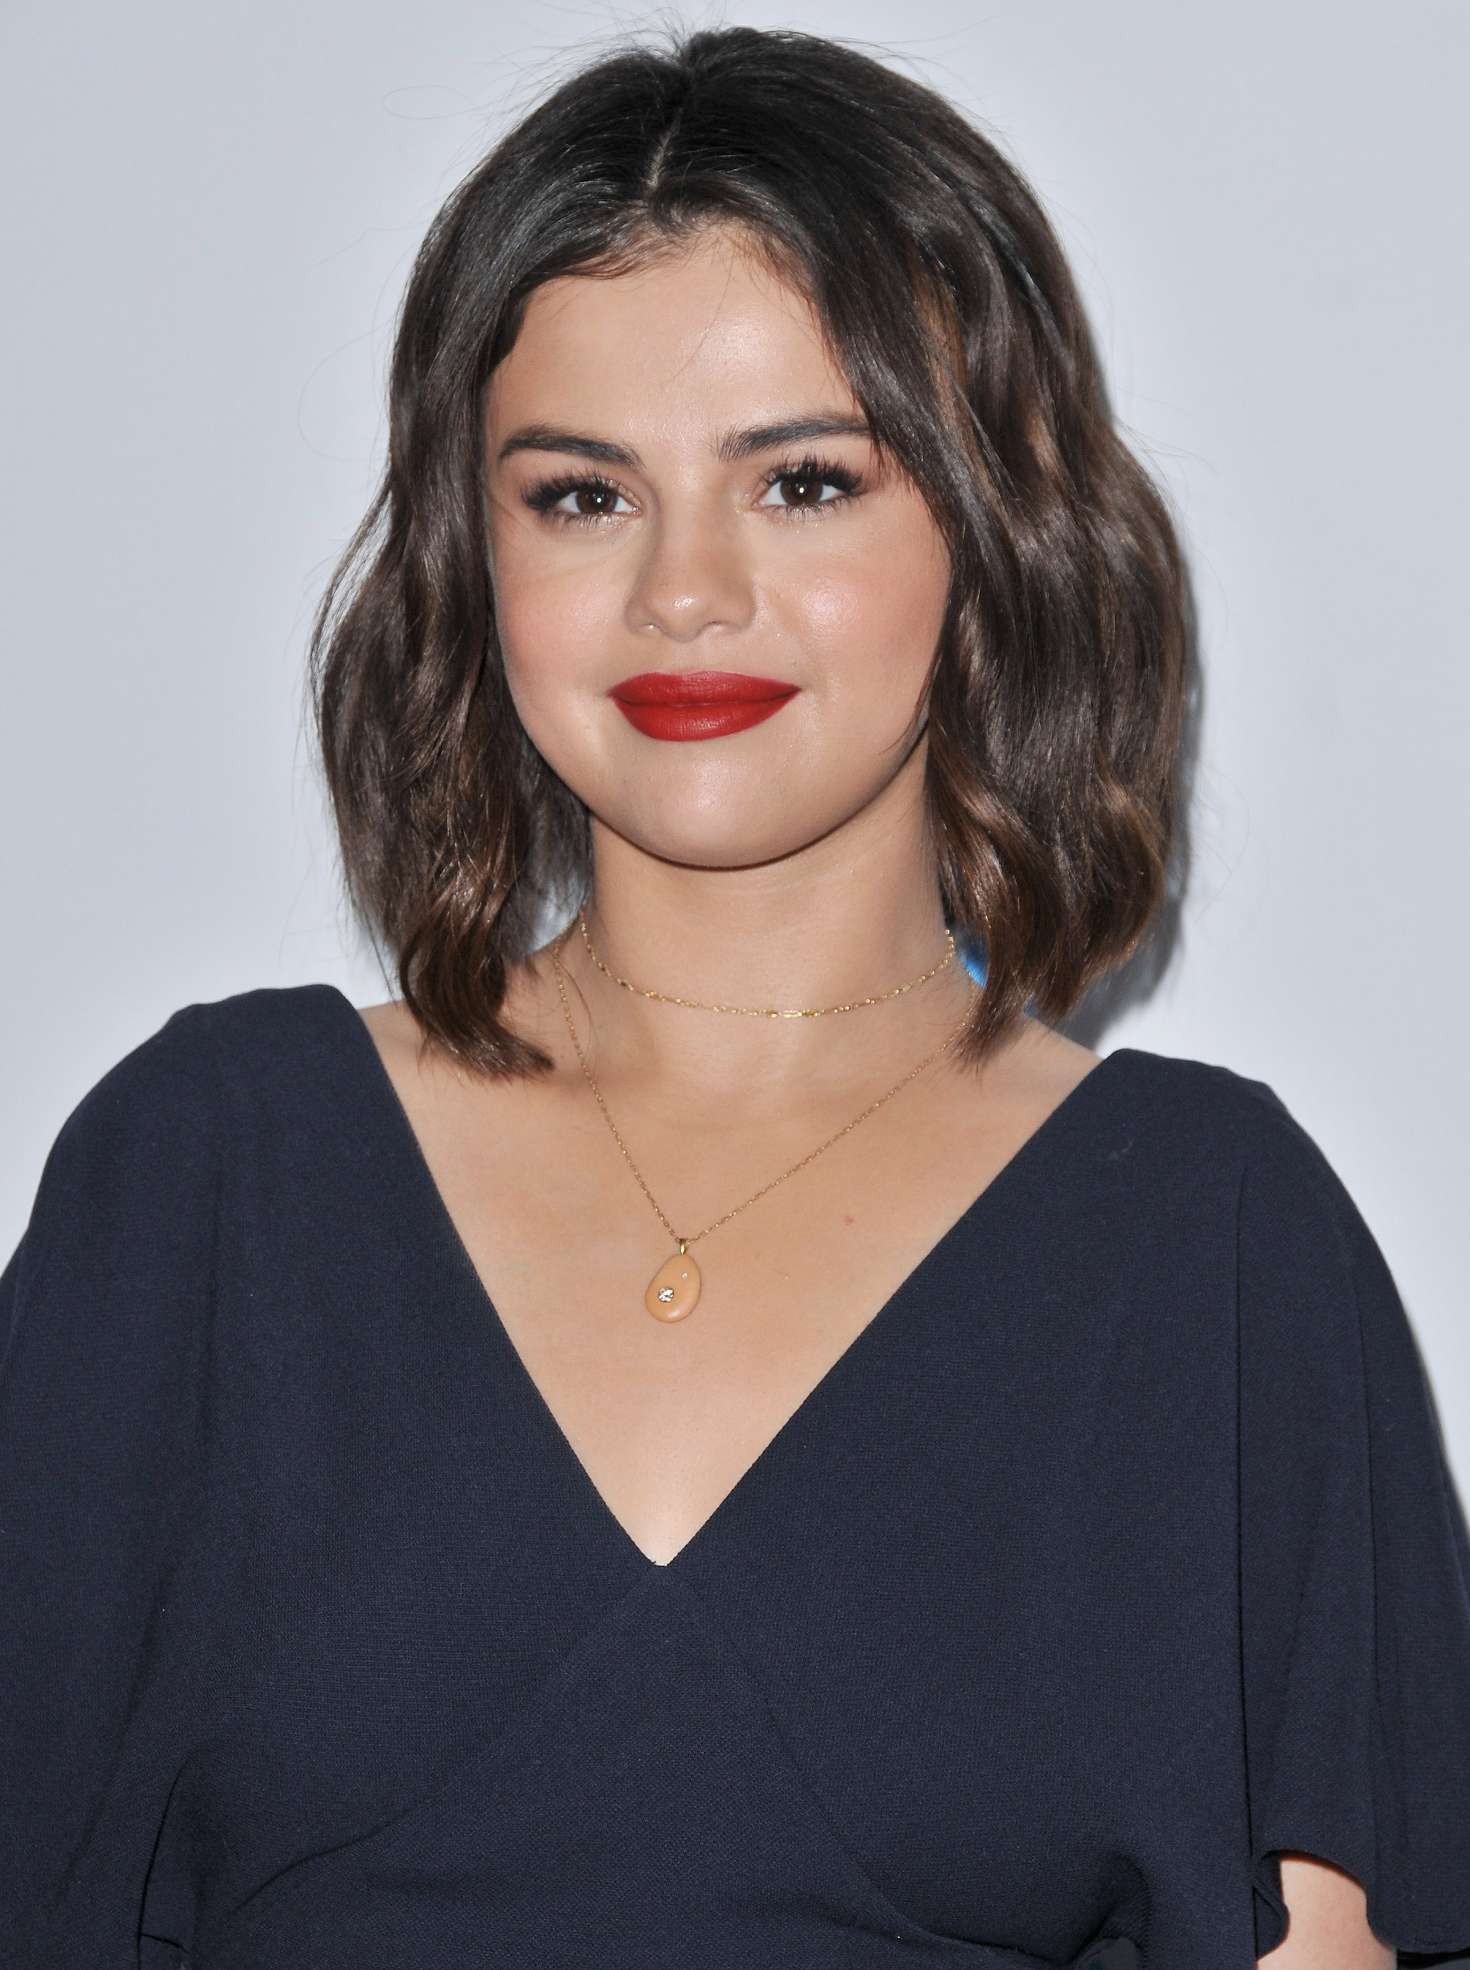 Selena Gomez â€“ 2018 WE Day California in Los Angeles